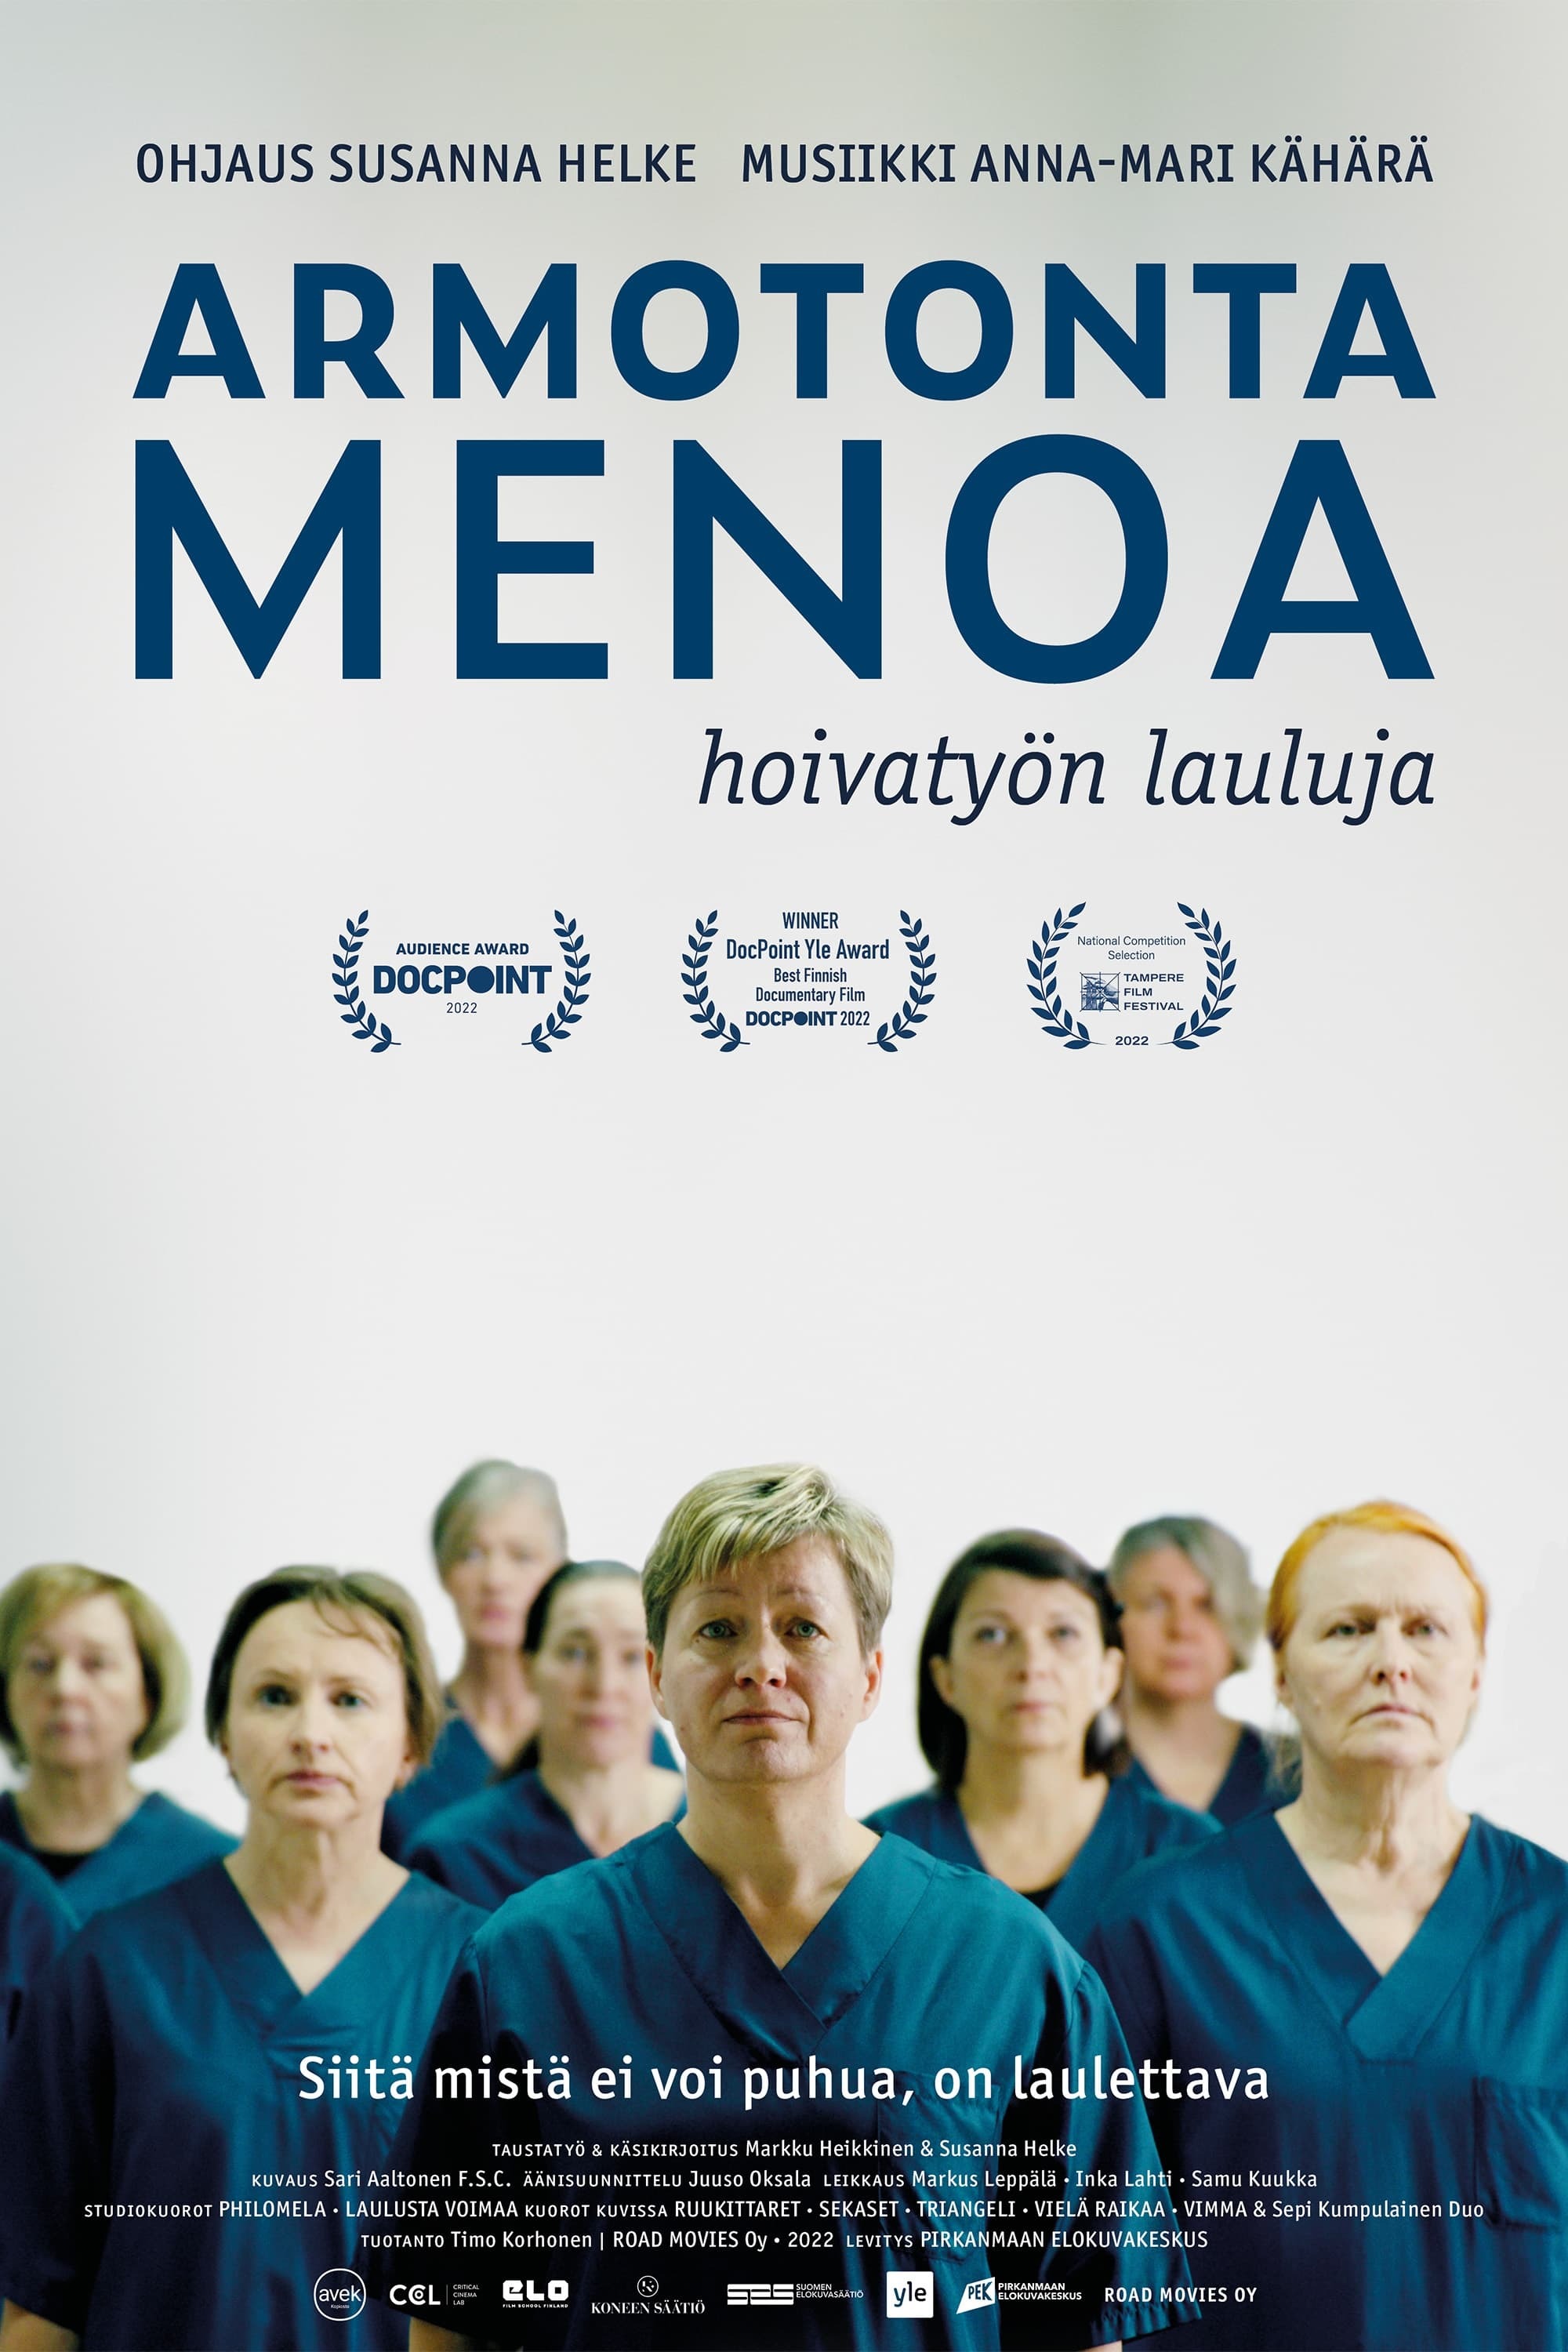 Mega Sized Movie Poster Image for Armotonta menoa - hoivatyön lauluja 